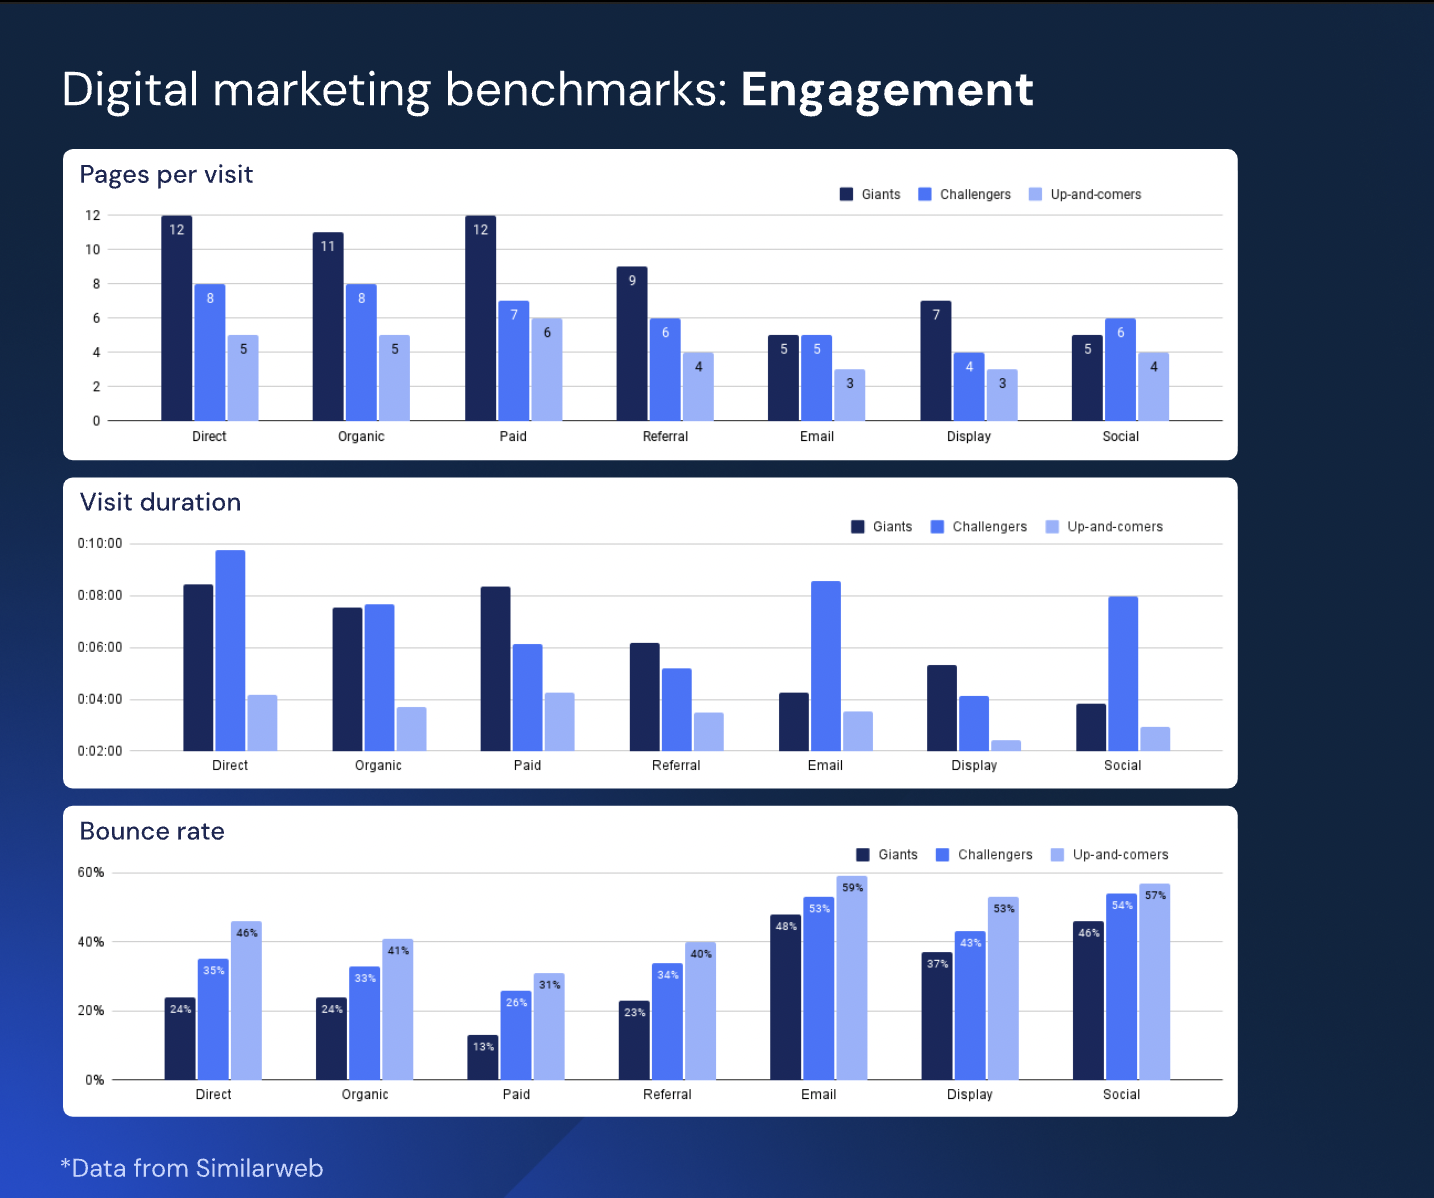 Digital marketing benchmarking: Engagement